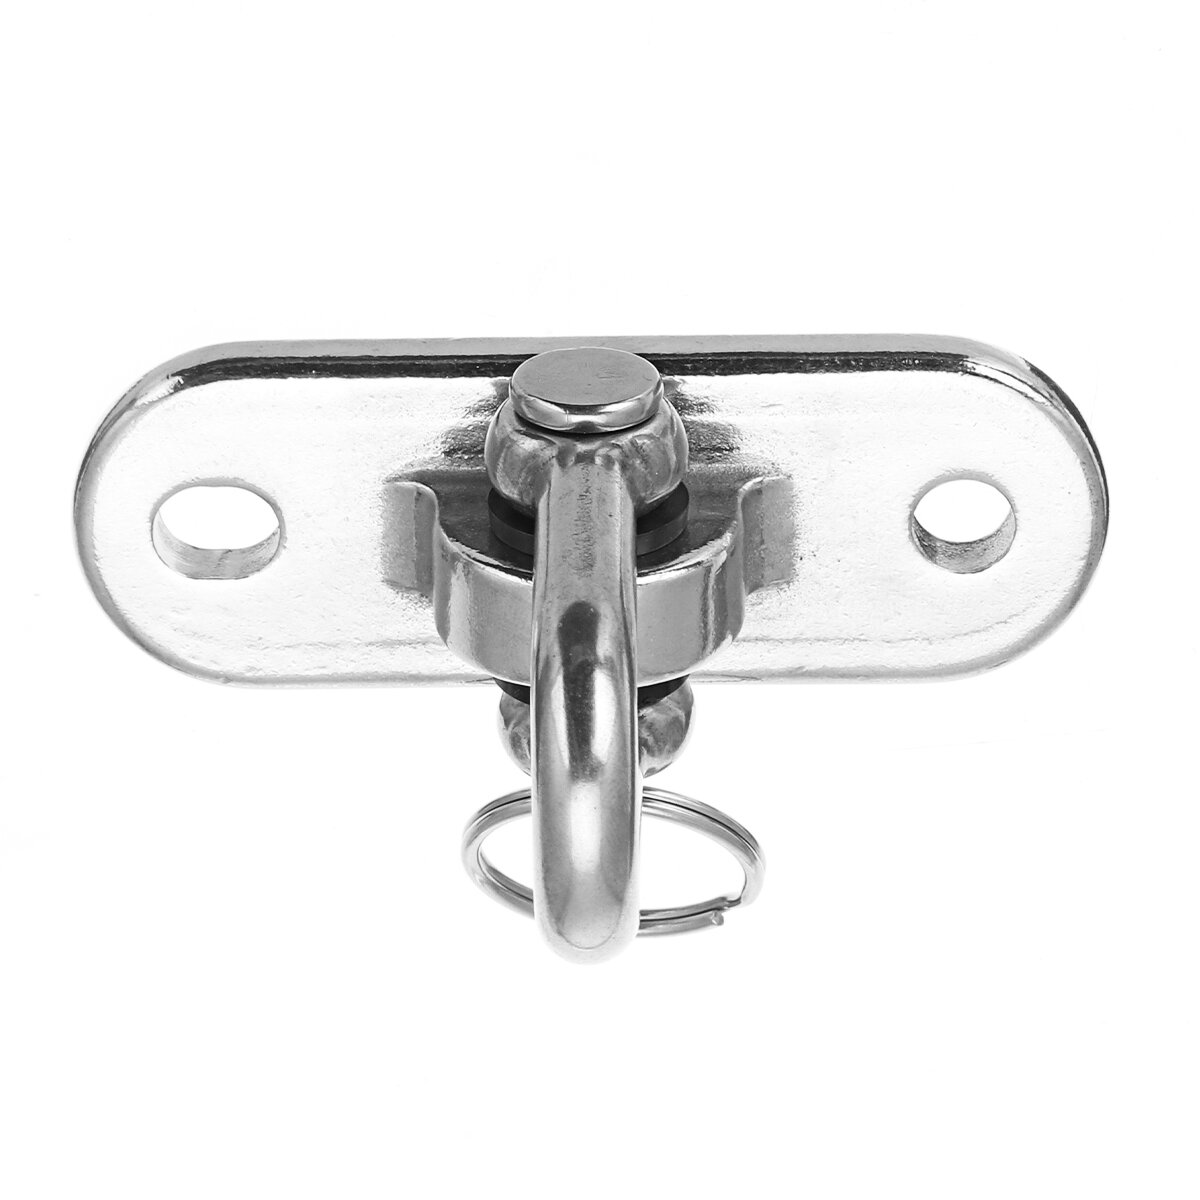 

Stainless Steel Hammock Hook Swing Accessories Hanging Expansion Screws Kits